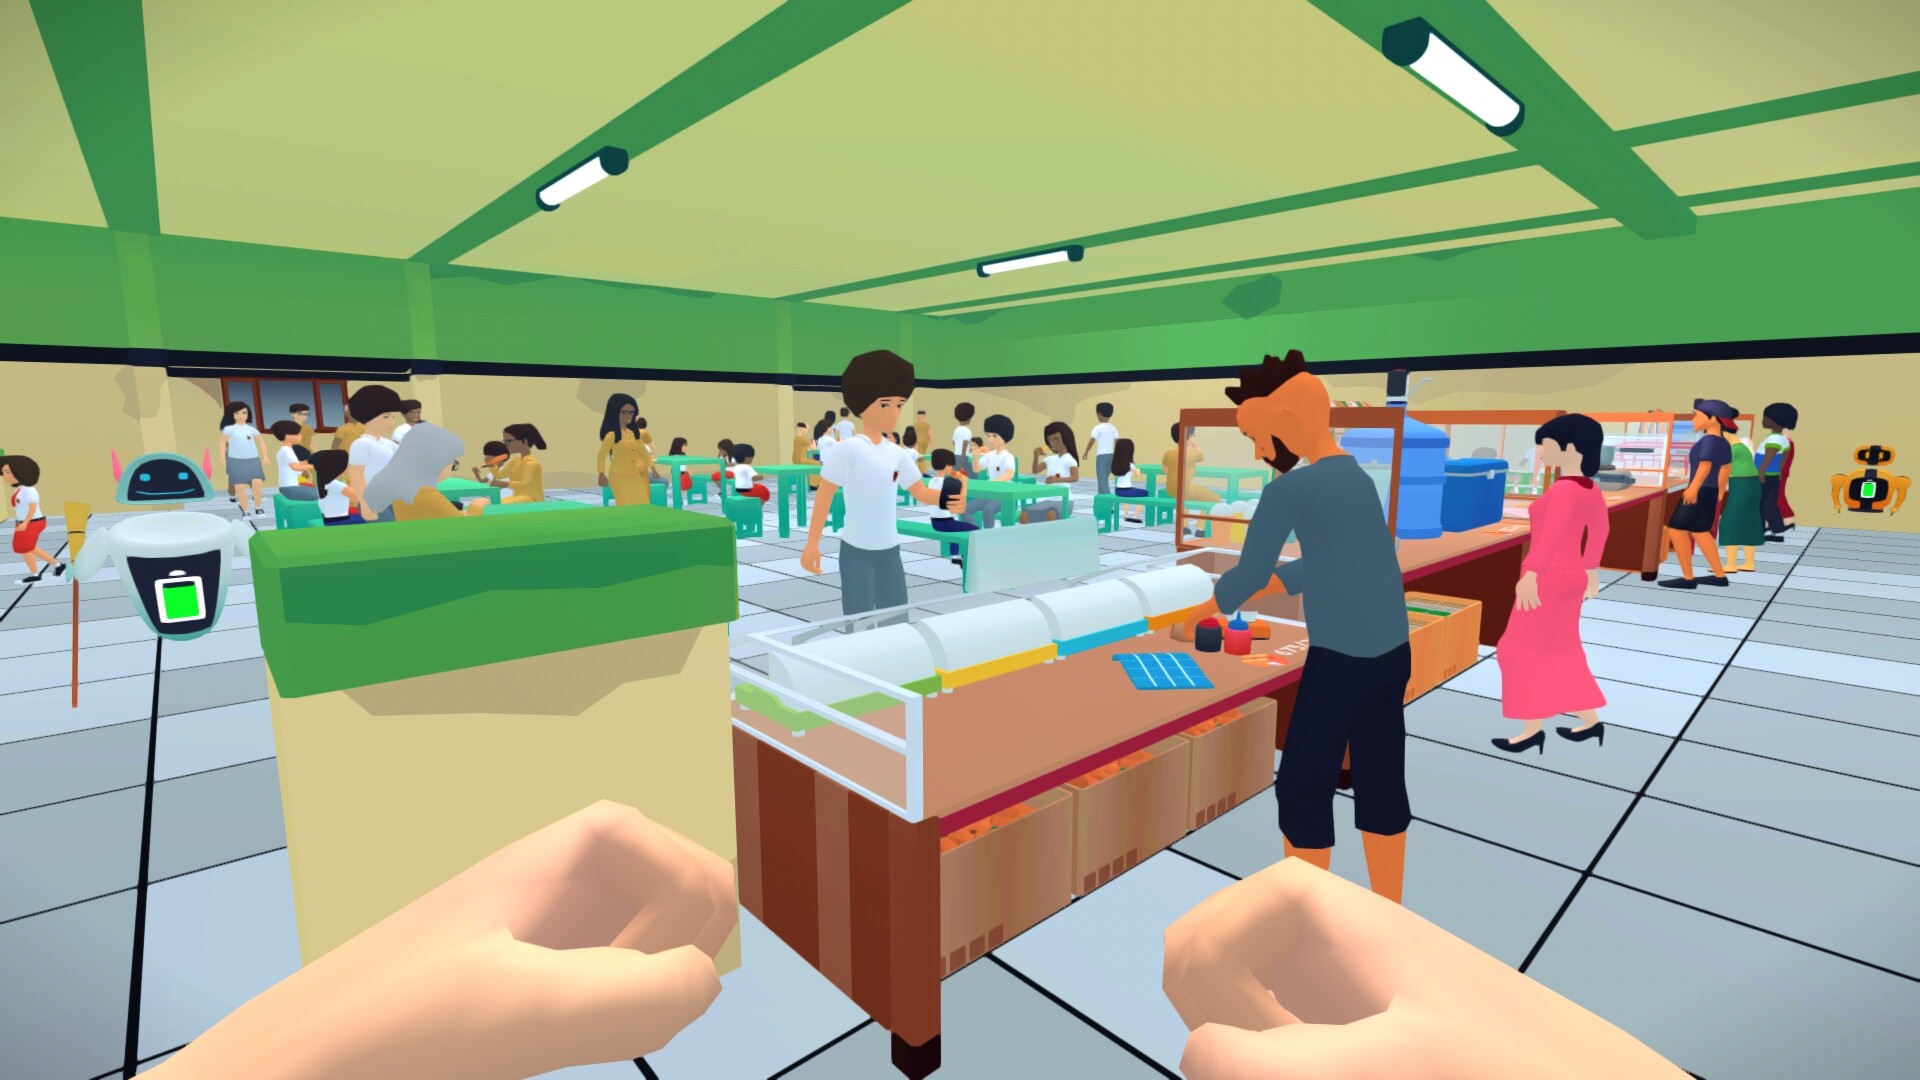 School Cafeteria Simulator Steam CD Key 2.81 USD